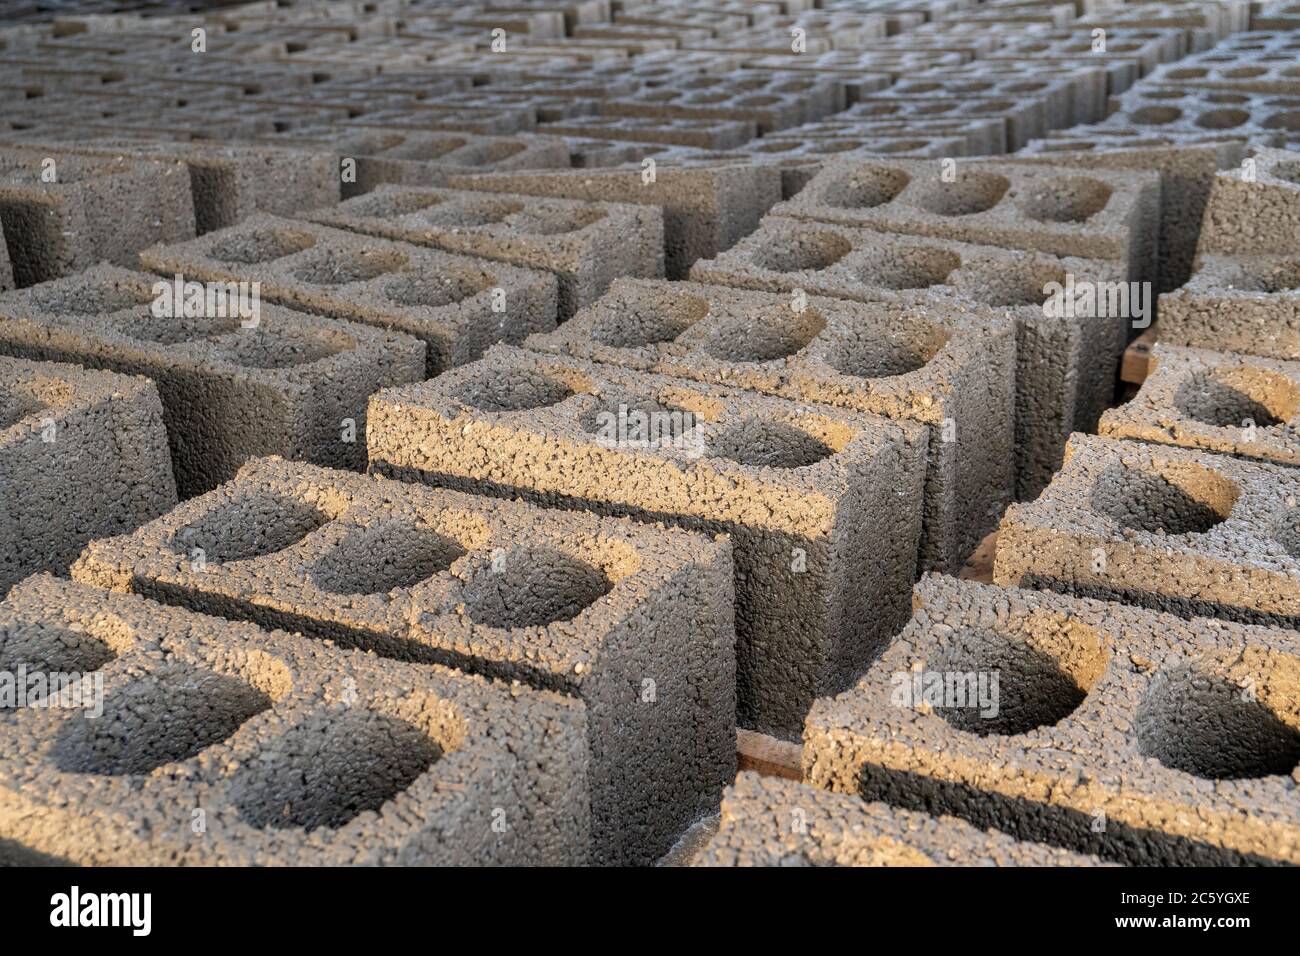 stacks of gray concrete blocks on the ground Stock Photo